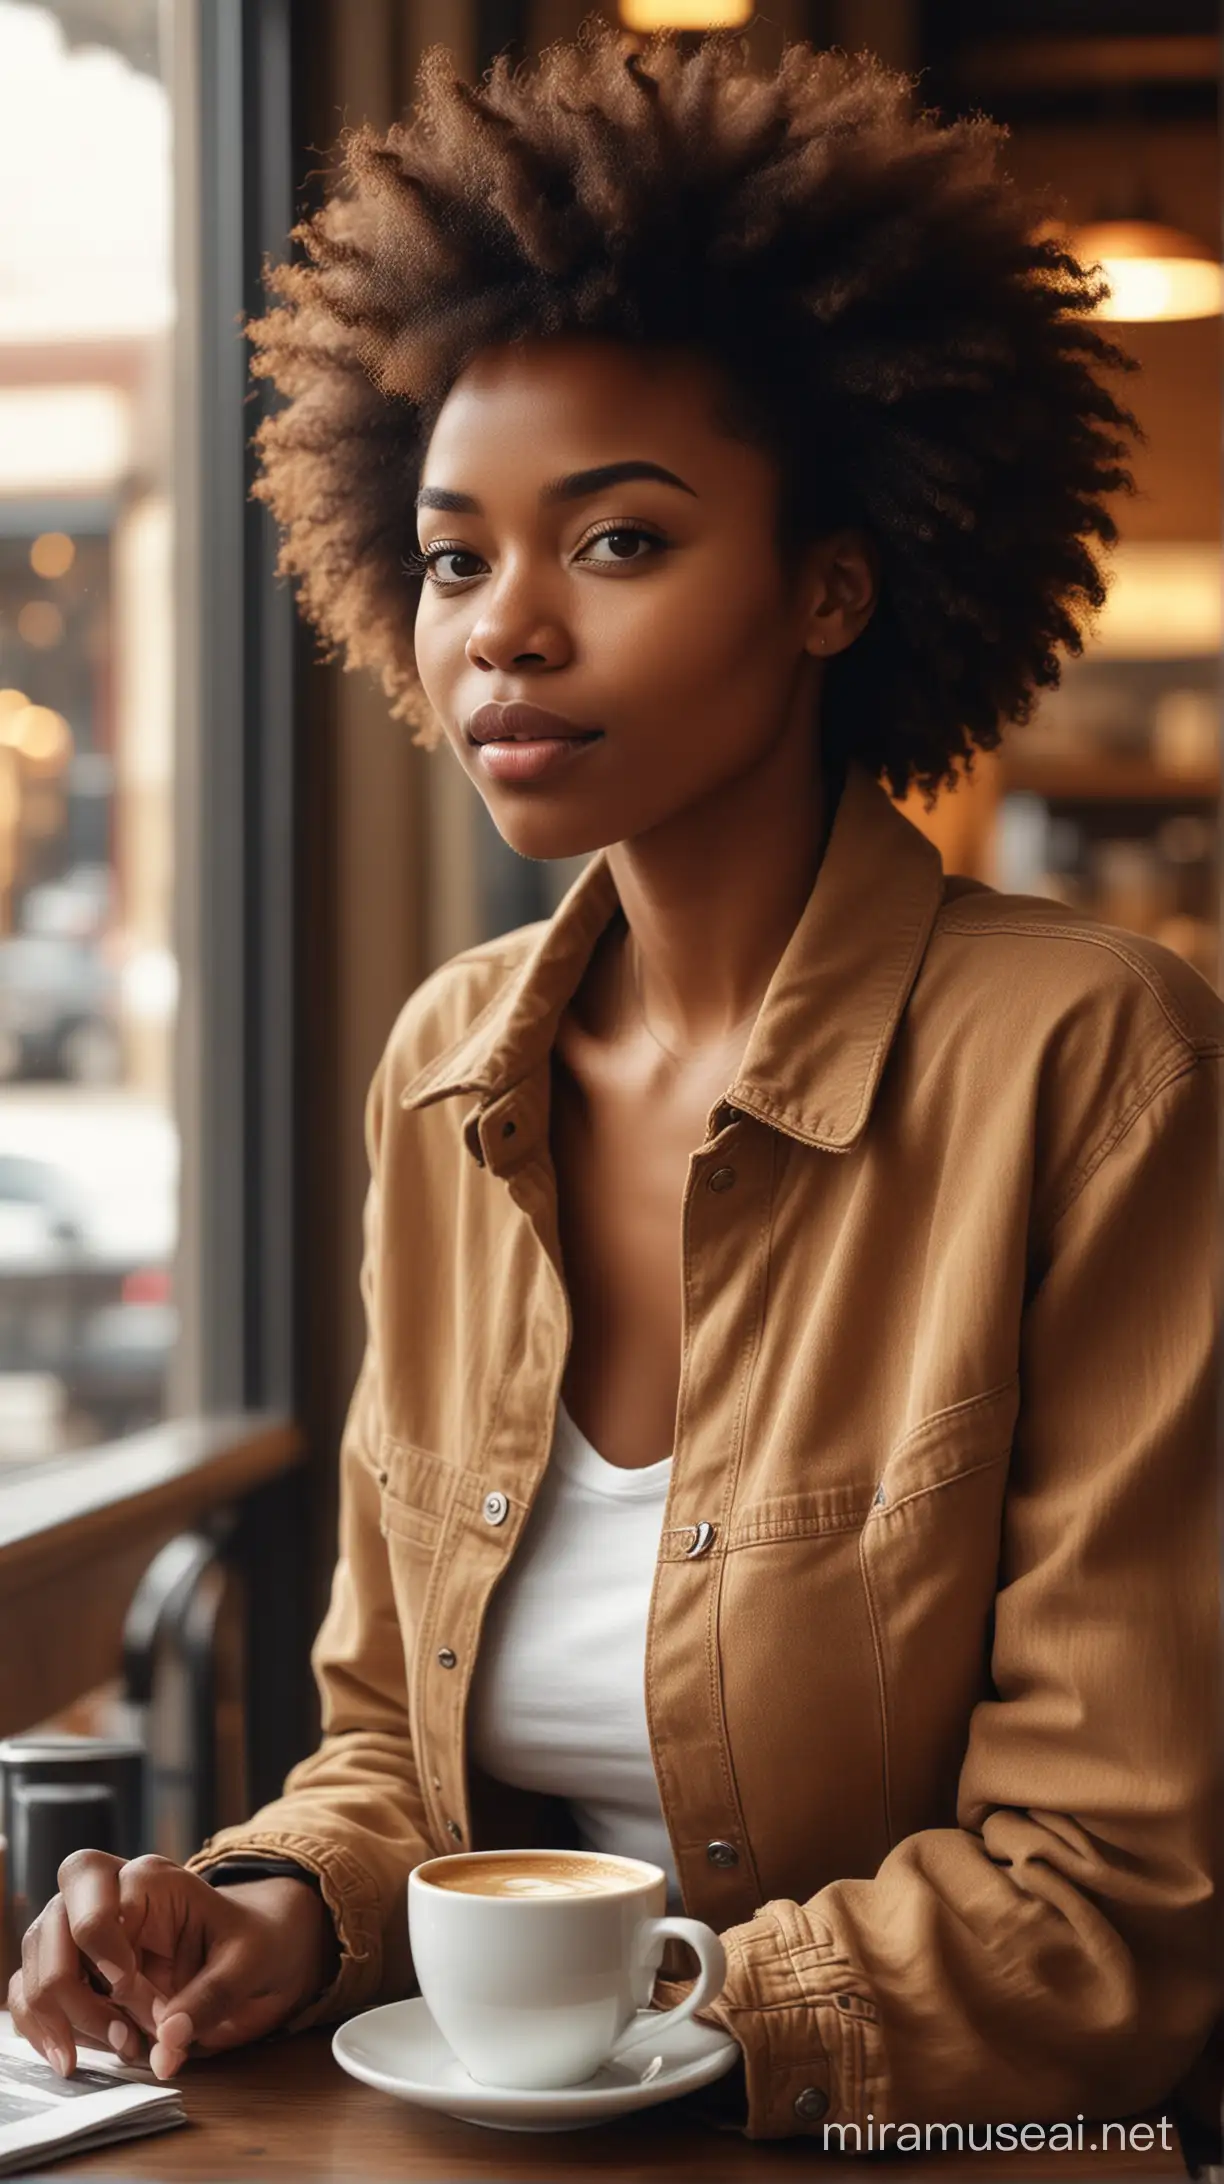 Empathetic African American Woman in Vibrant Coffee Shop Scene